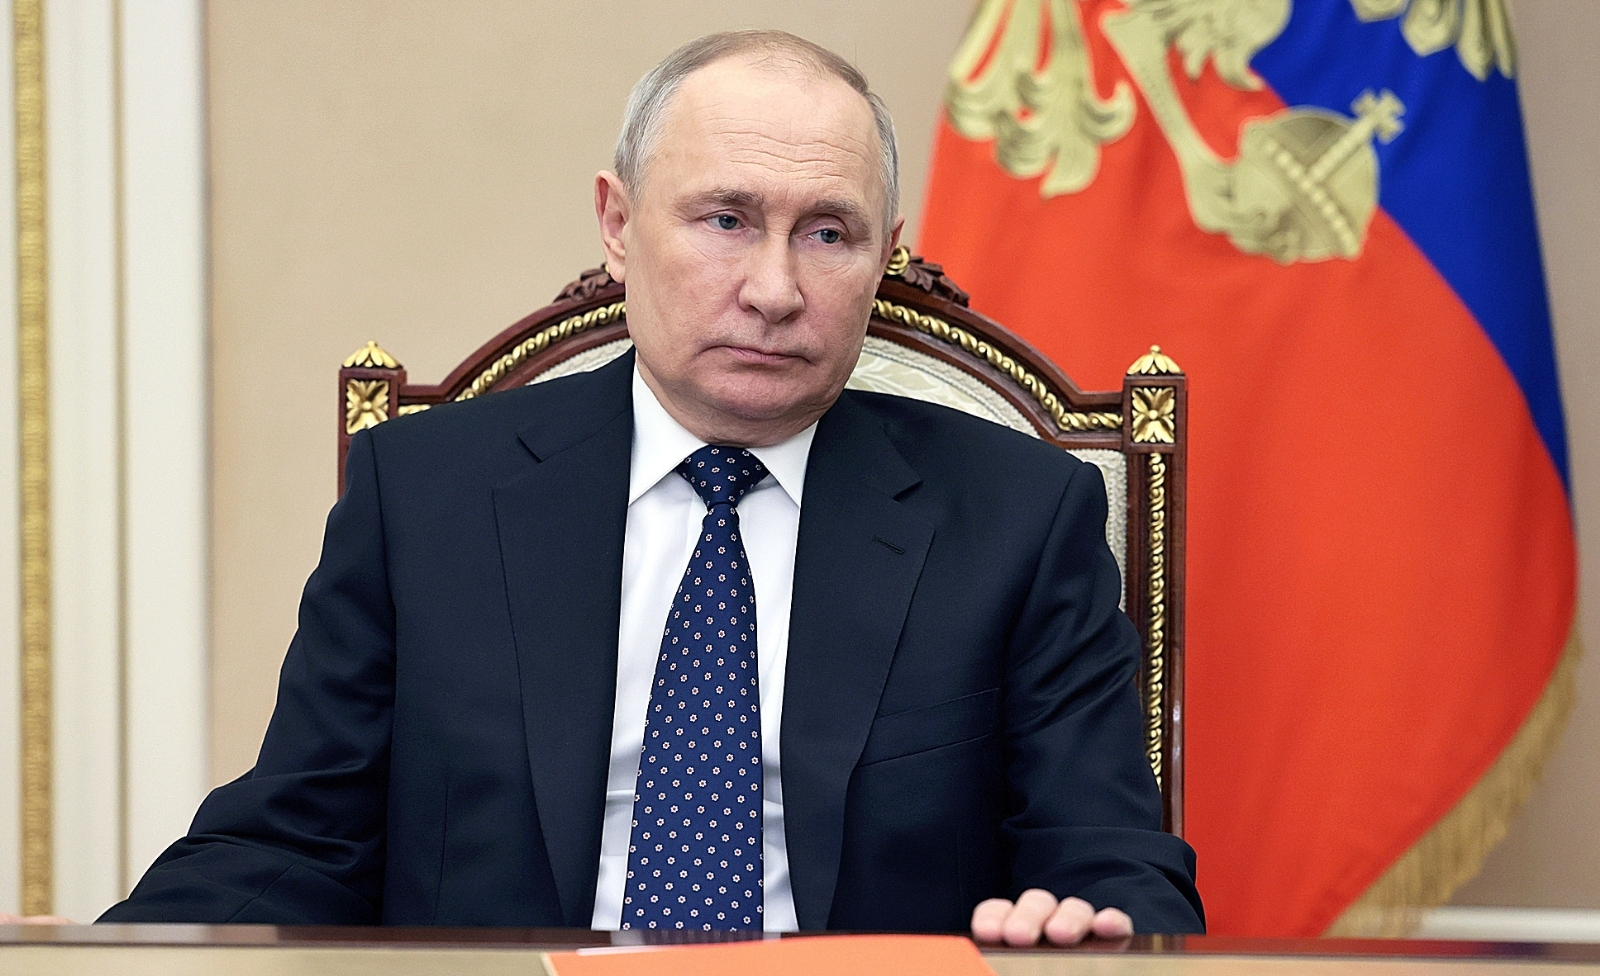 Vladímir Putin anuncia acuerdo para desplegar armamento nuclear táctico en Bielorrusia